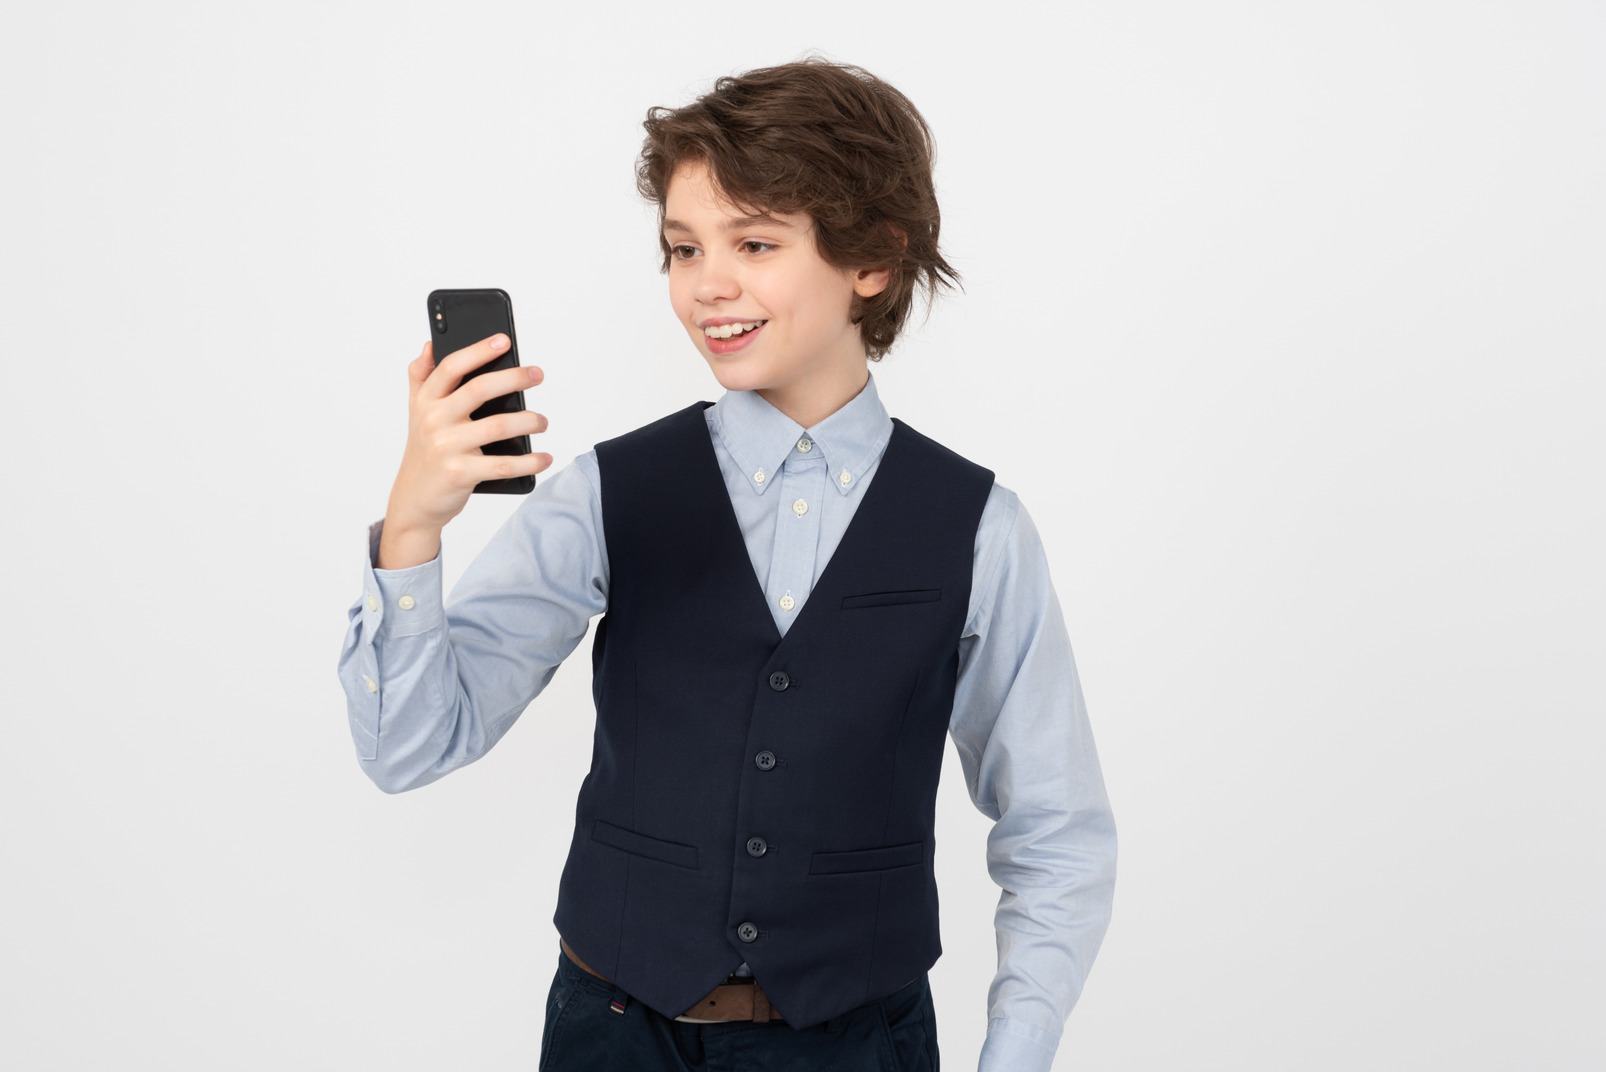 Schoolboy making a selfie on his smartphone